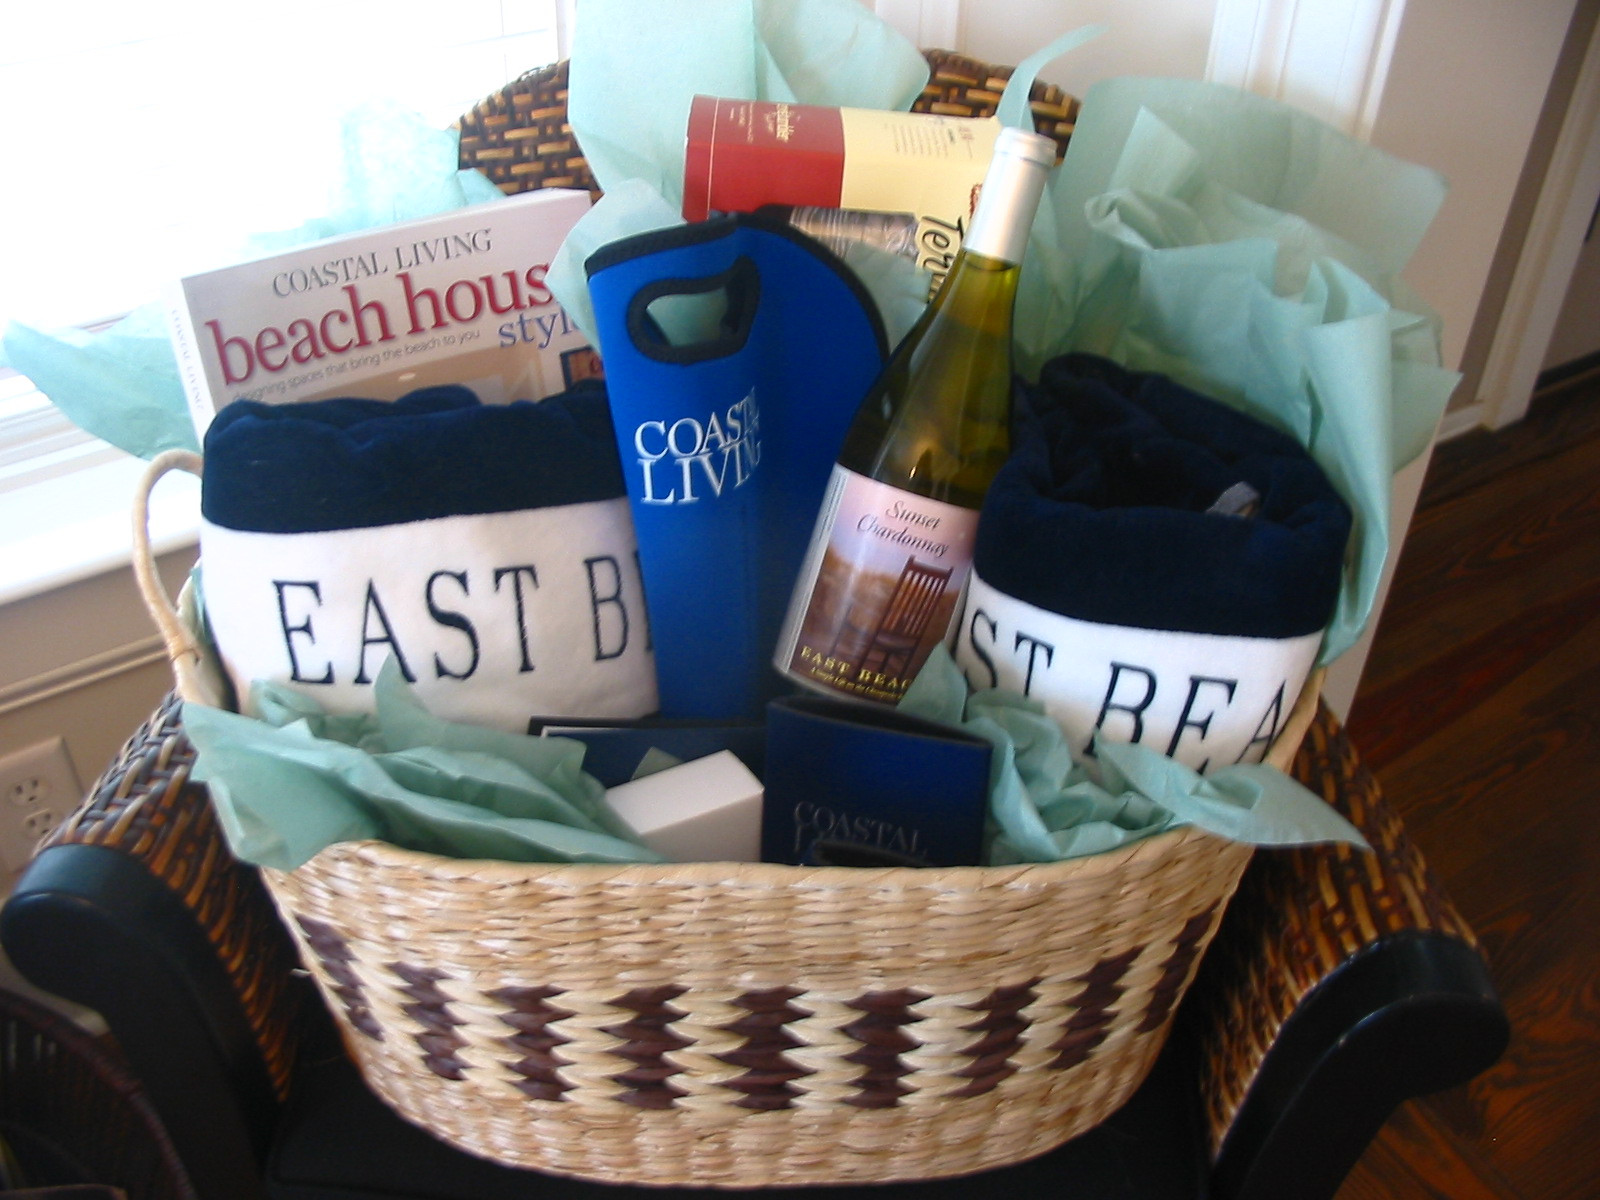 Beach Basket Gift Ideas
 East Beach